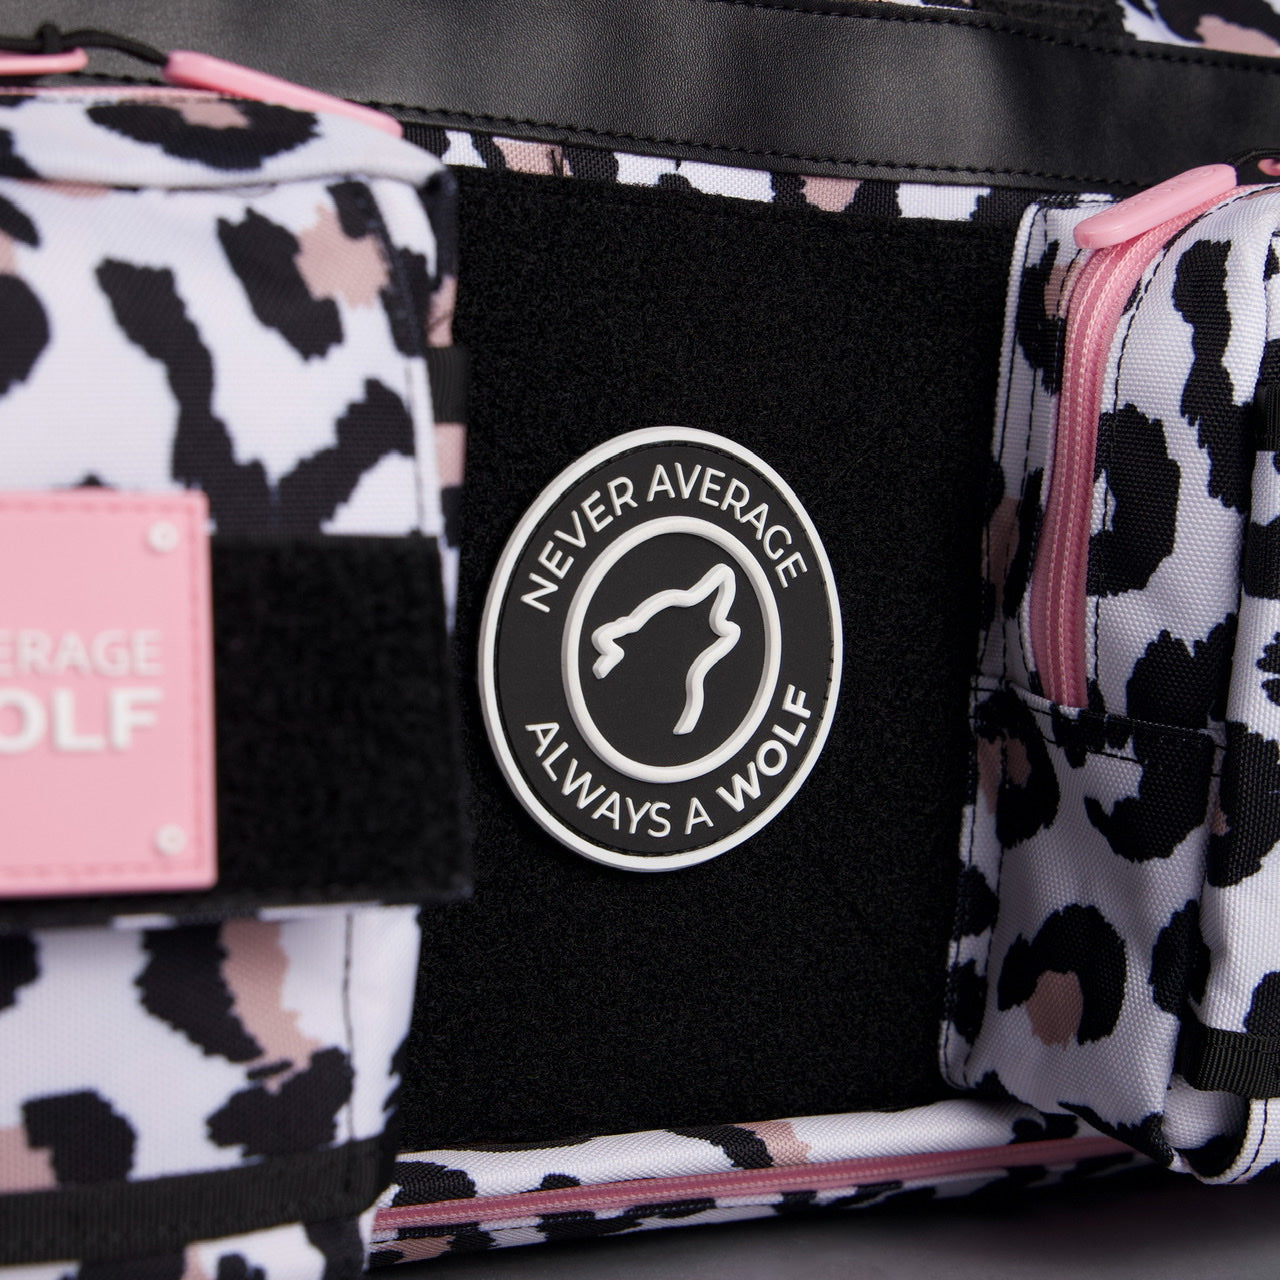 40L Ultimate Duffle Bag Leopard Pink Zip